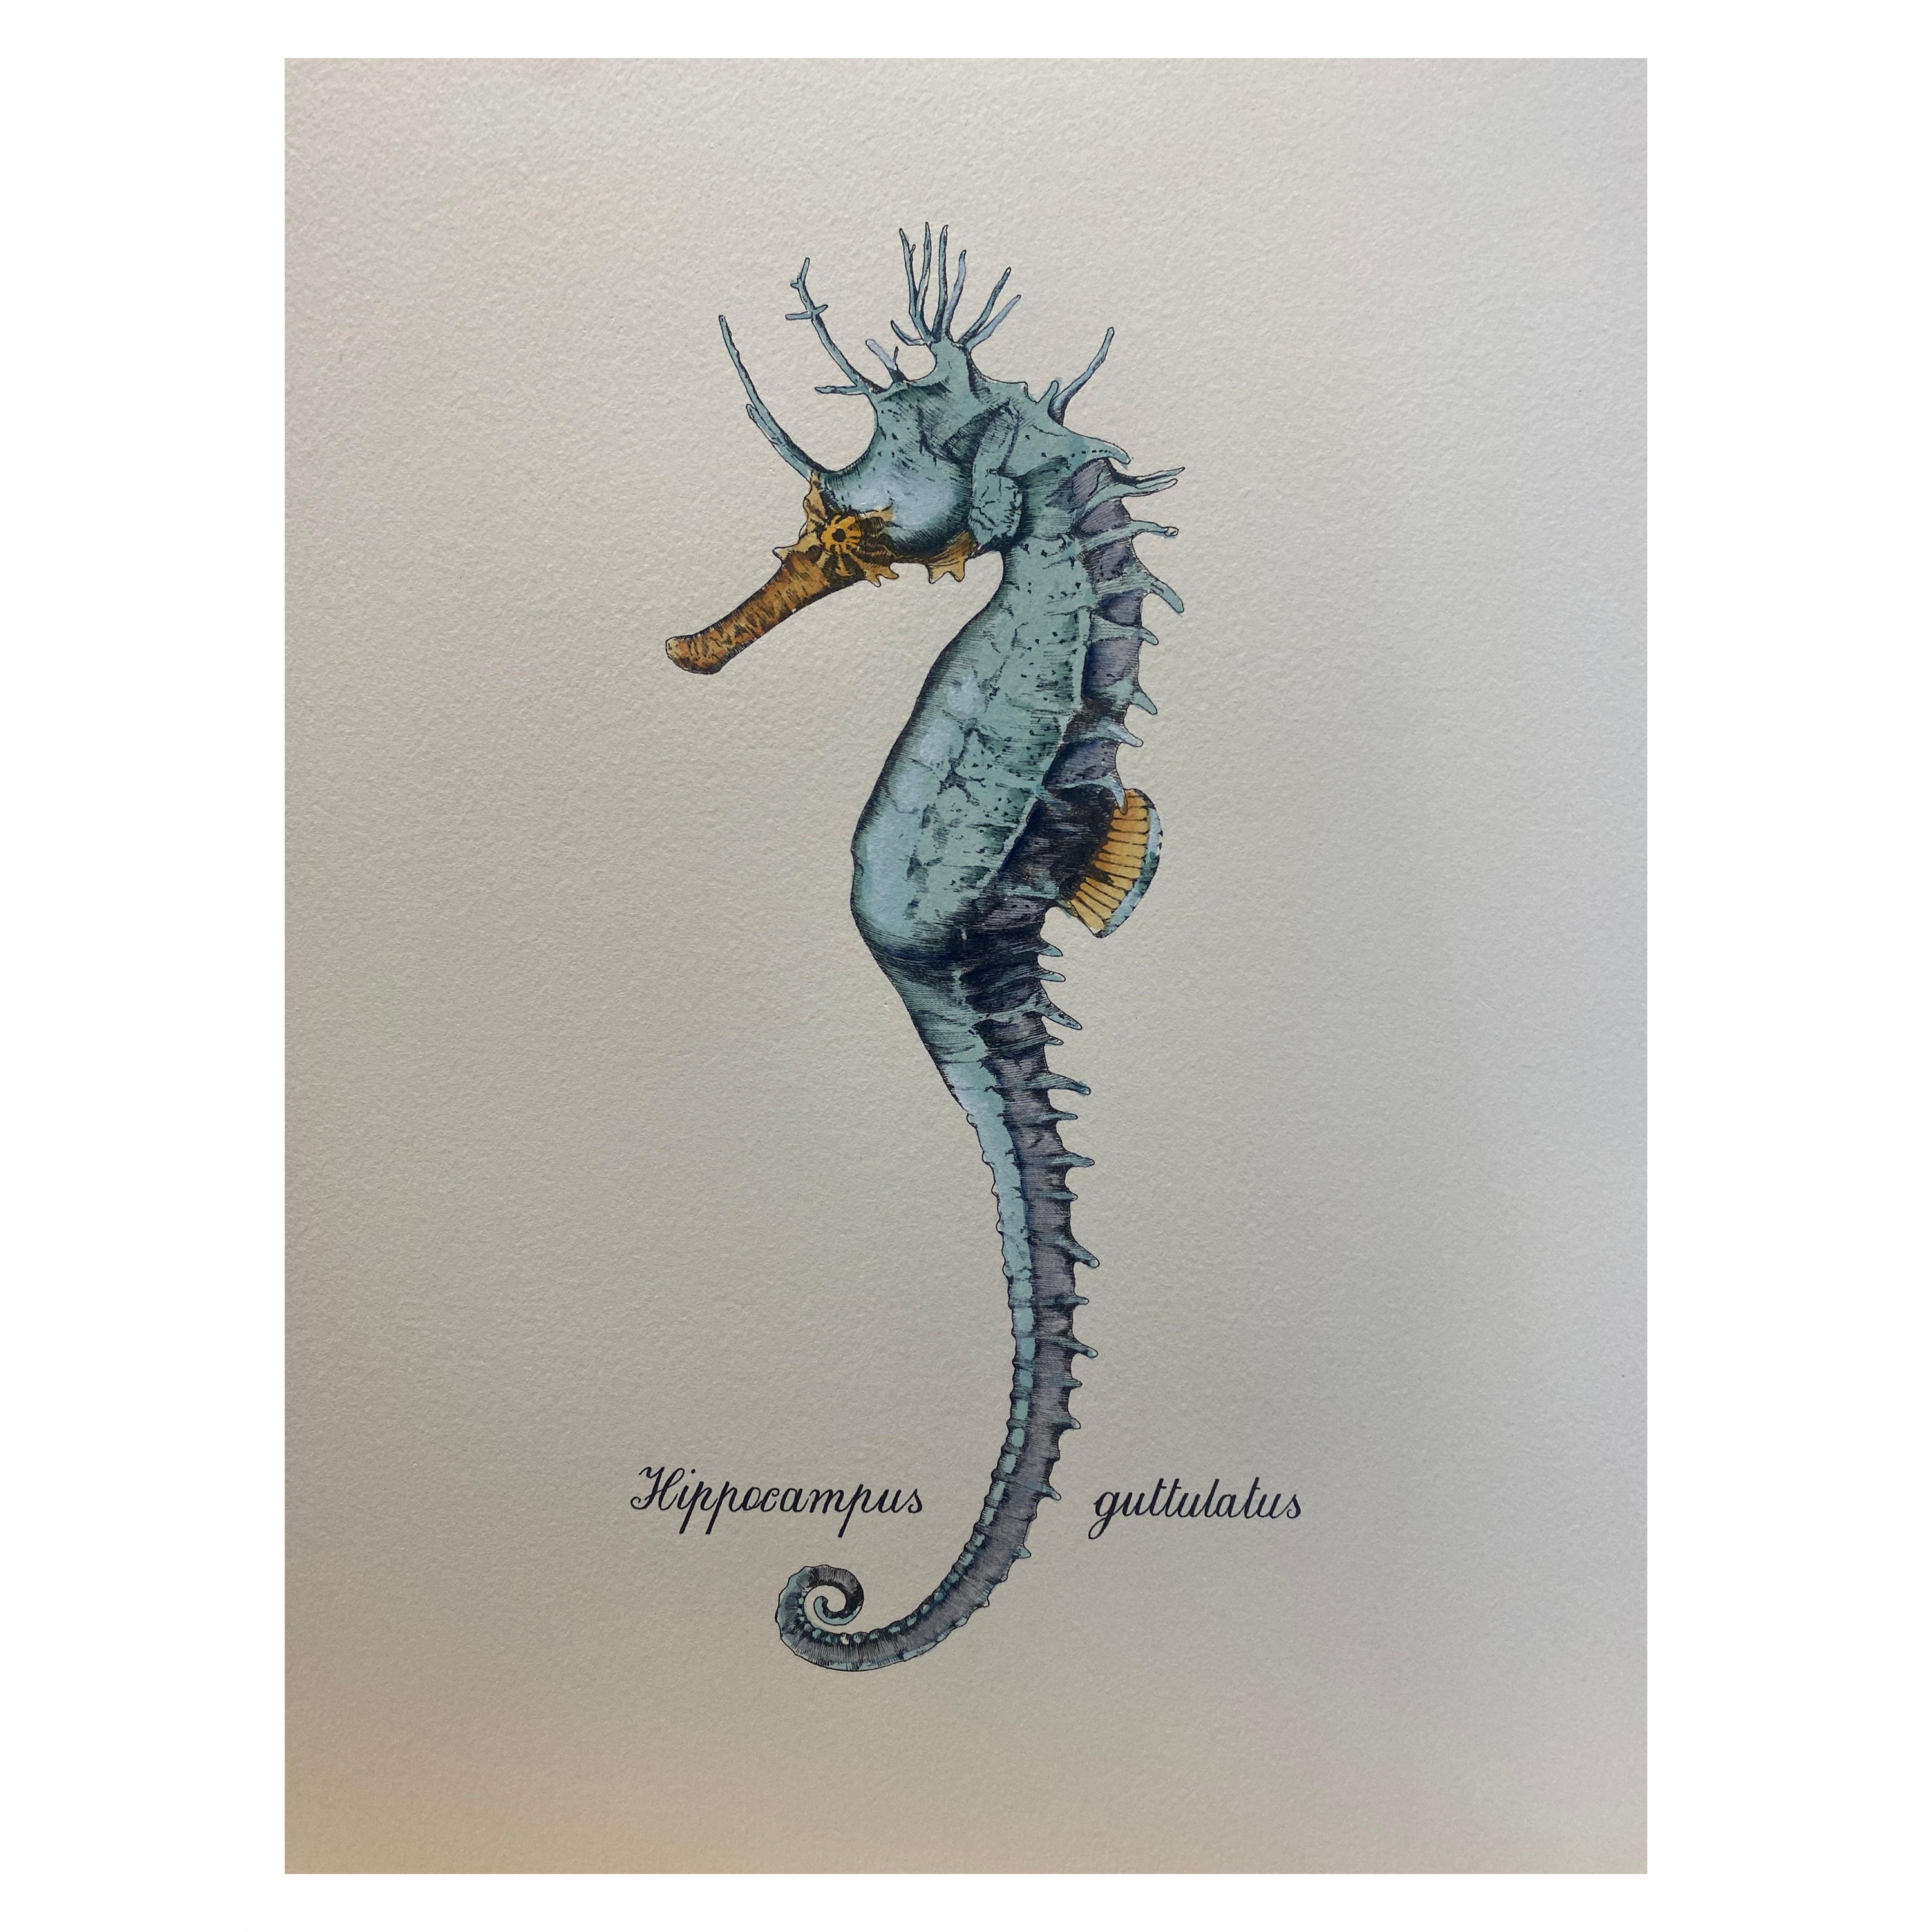 Italian Contemporary Hand Painted Print "Hippocampus Guttulatus", 1 of 2